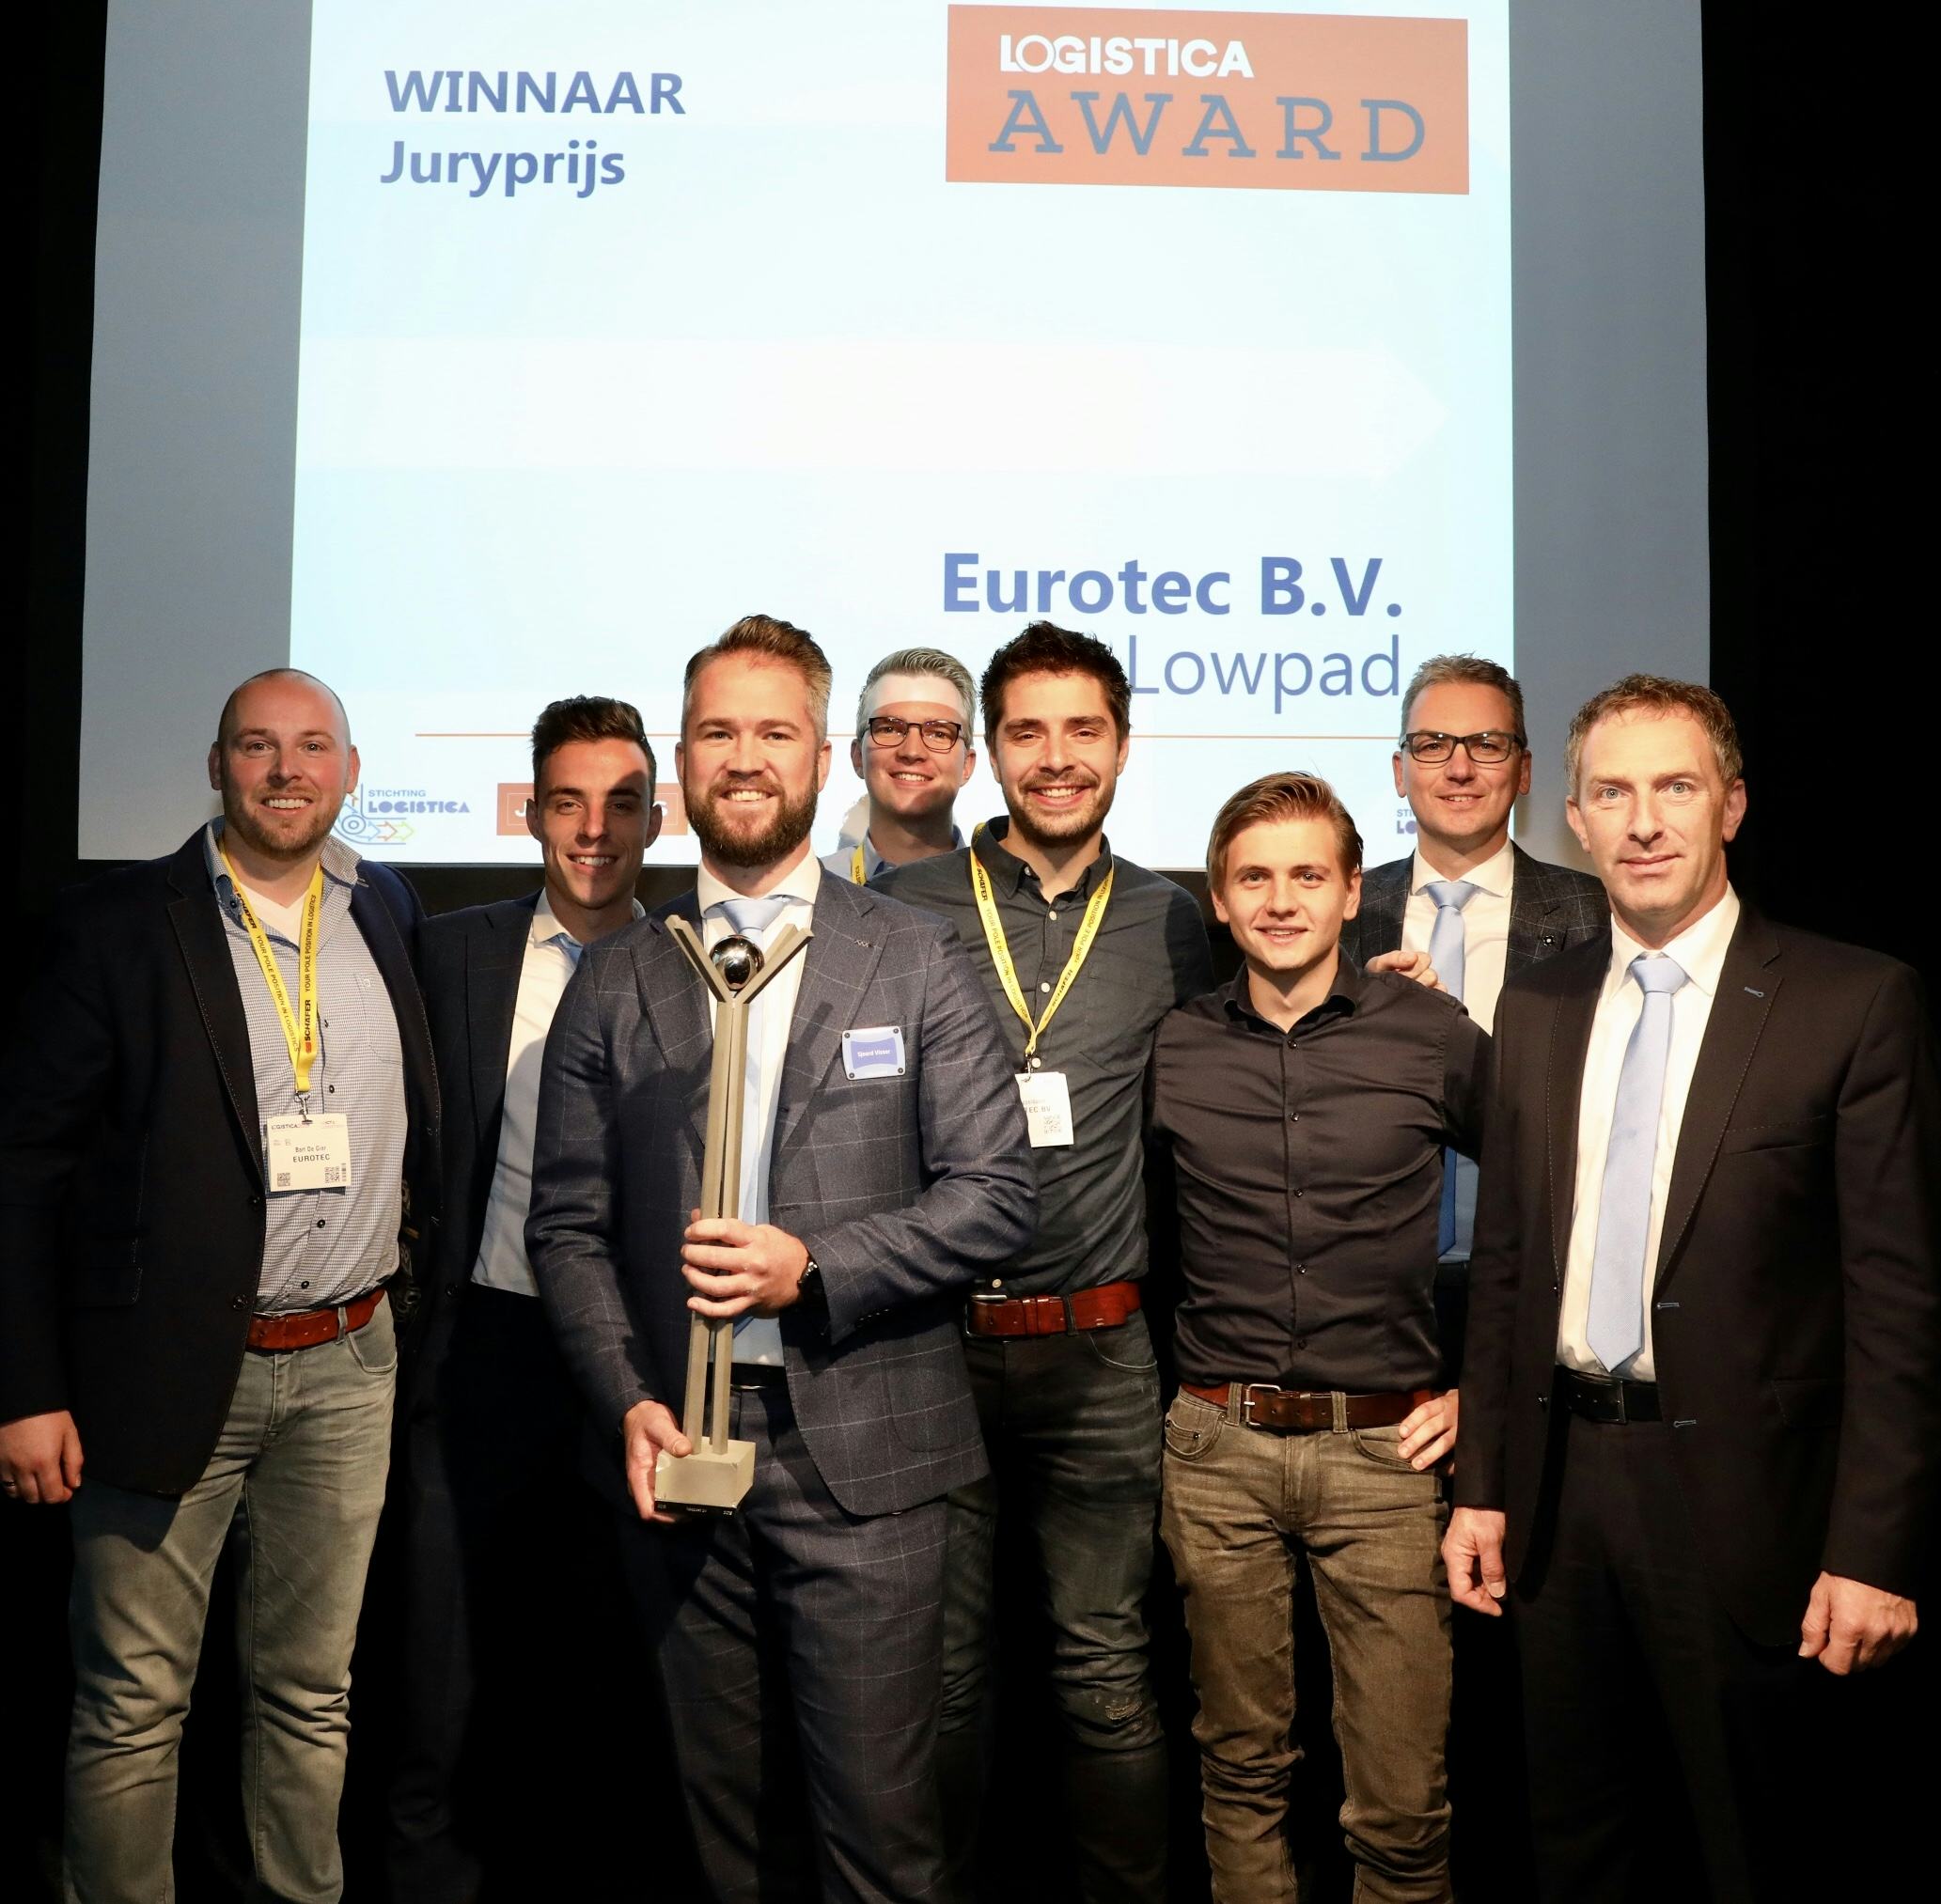 Logistica Award 2019: dubbelklapper voor Eurotec met Lowpad-AGV